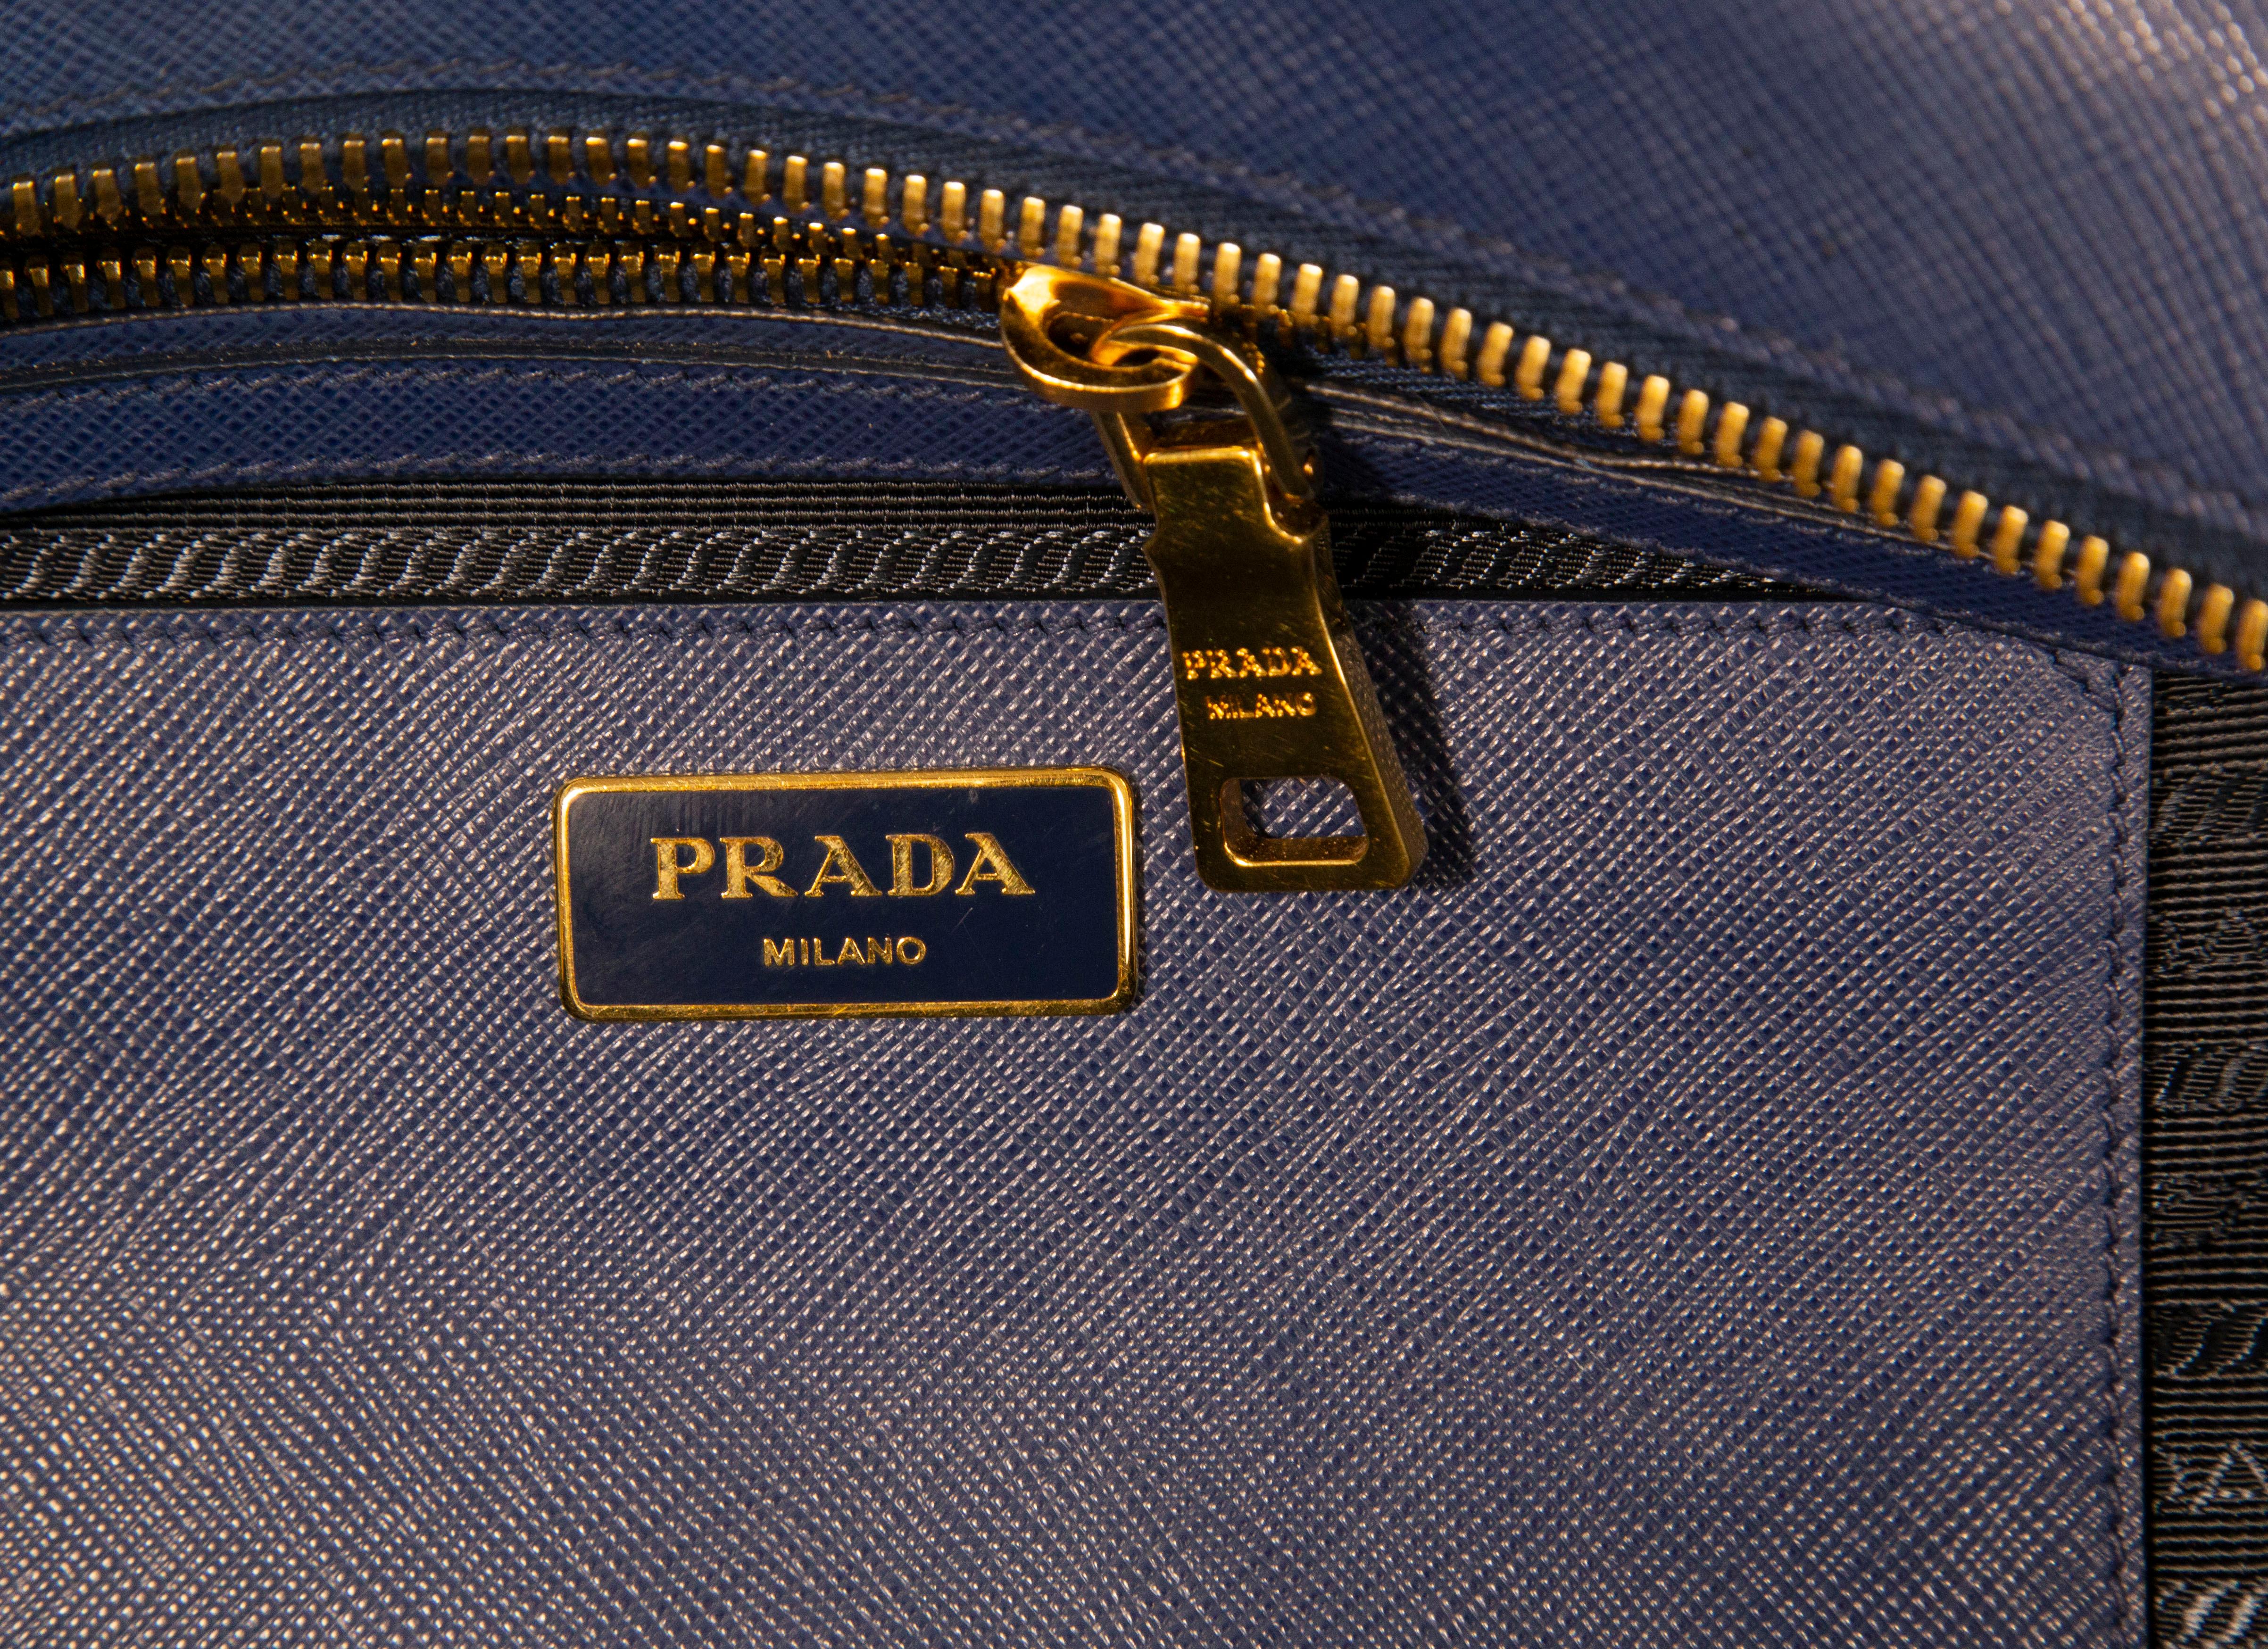  Prada Galleria Two Way Bag in Blue Saffiano Leather 14